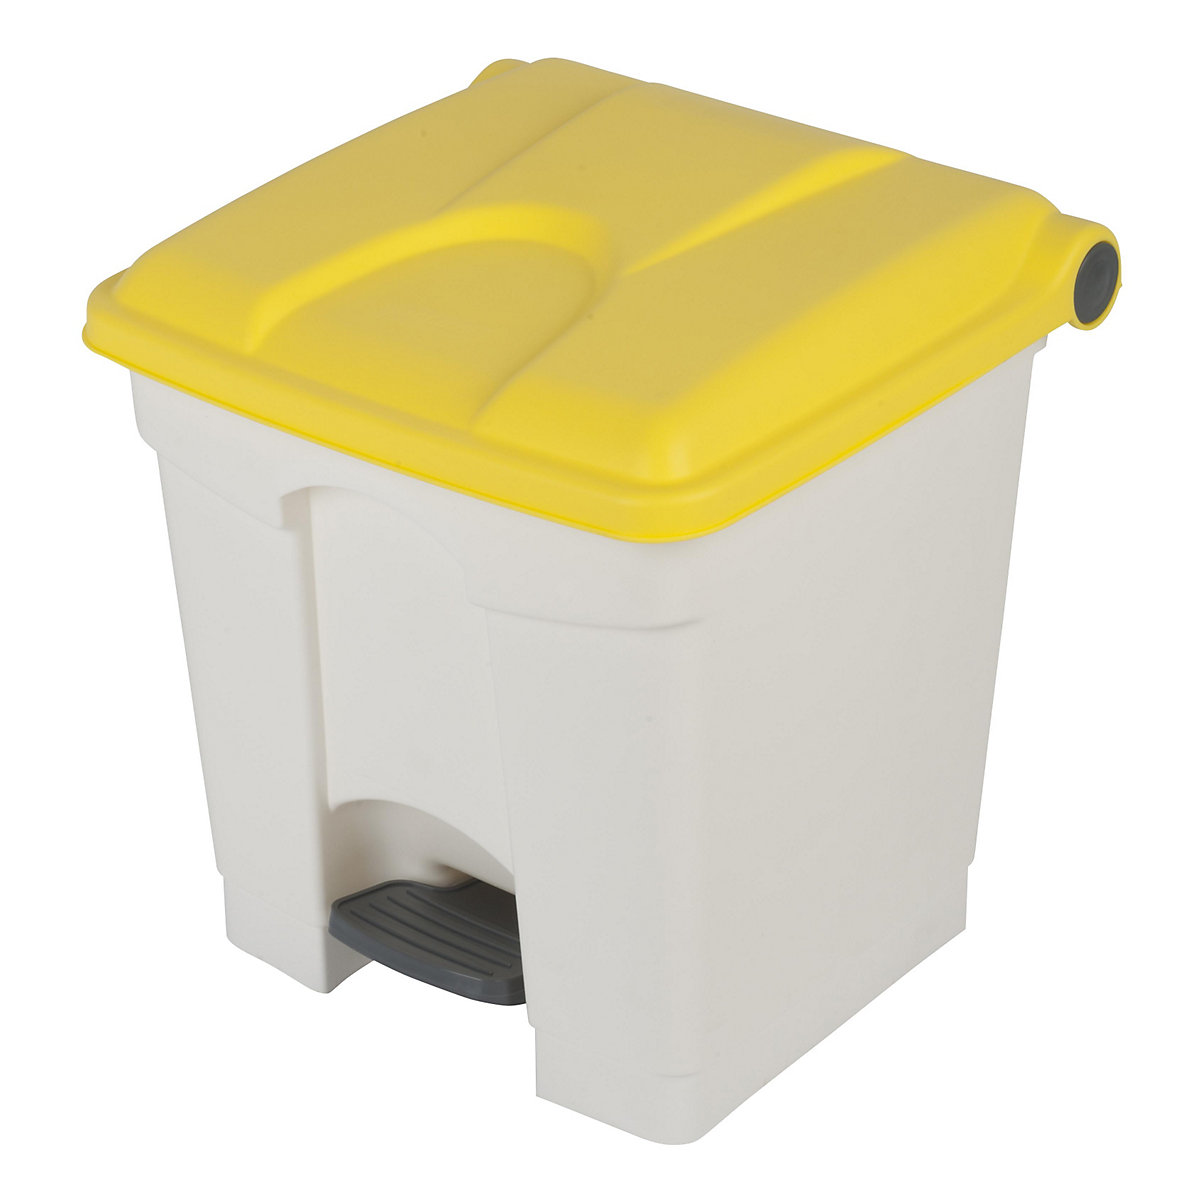 EUROKRAFTbasic – Pedal waste collector, capacity 30 l, WxHxD 410 x 435 x 400 mm, white, yellow lid